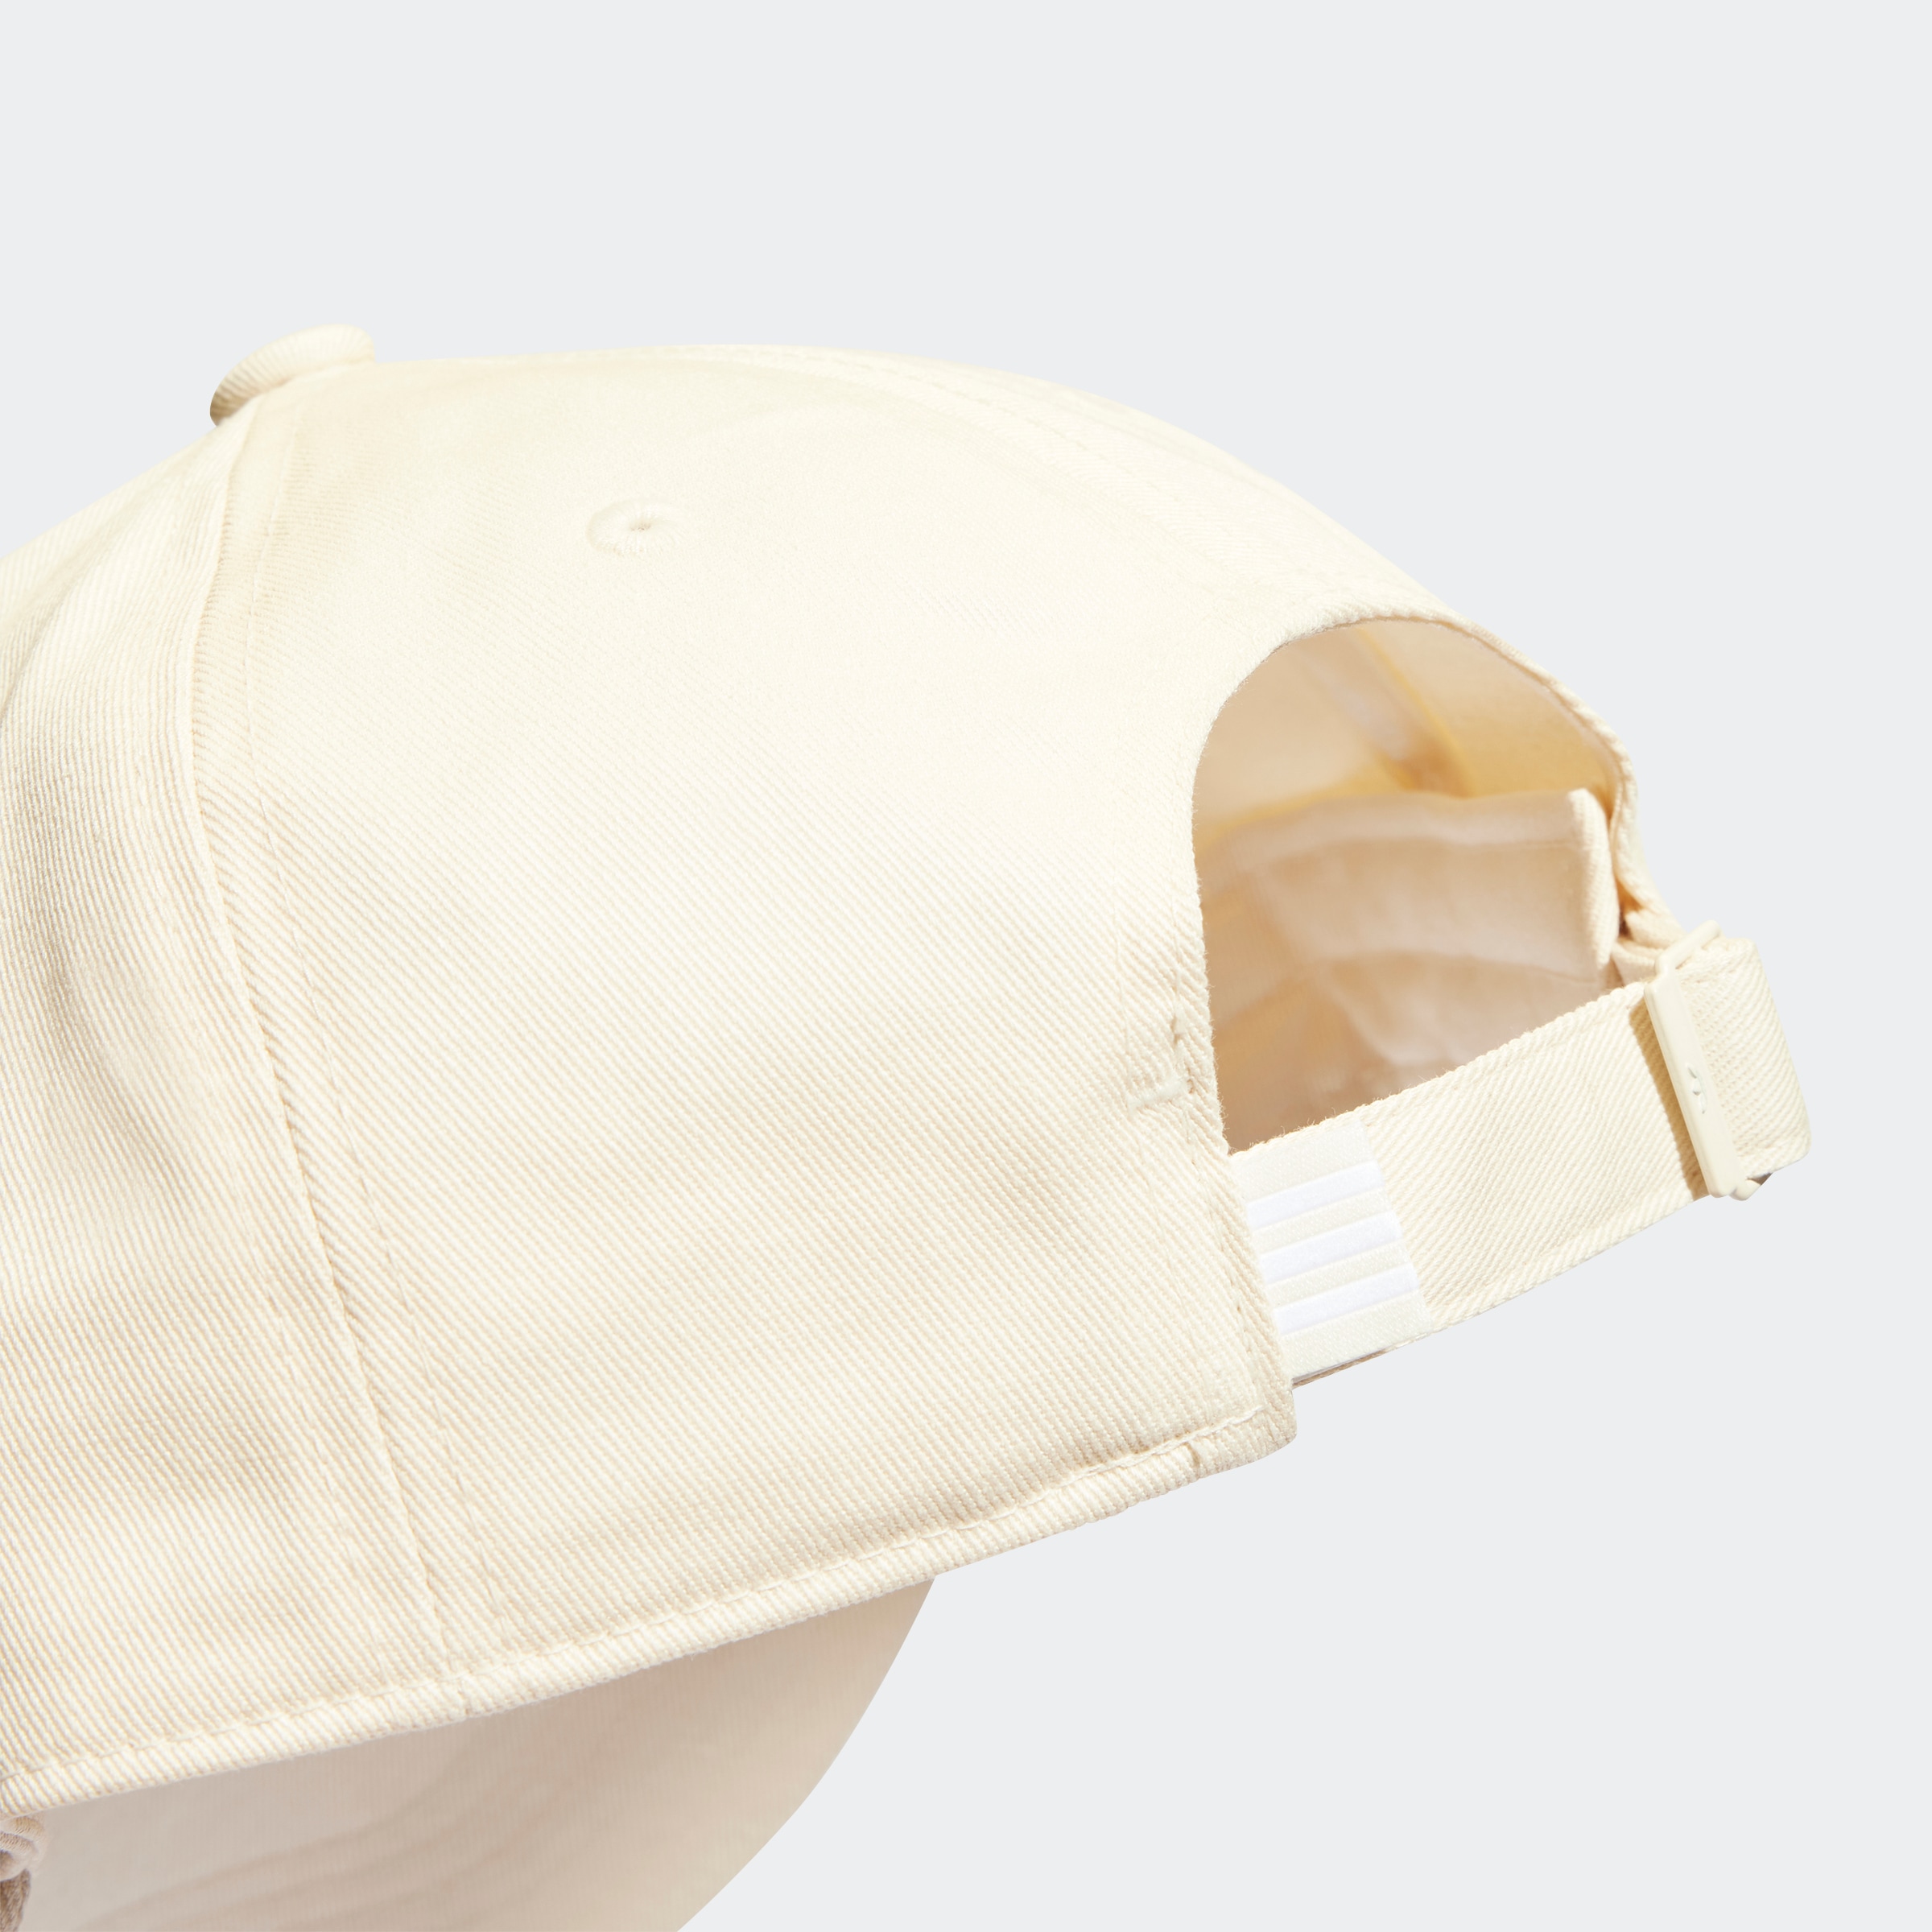 adidas Originals Baseball Cap »TREFOIL BASEBALL KAPPE«